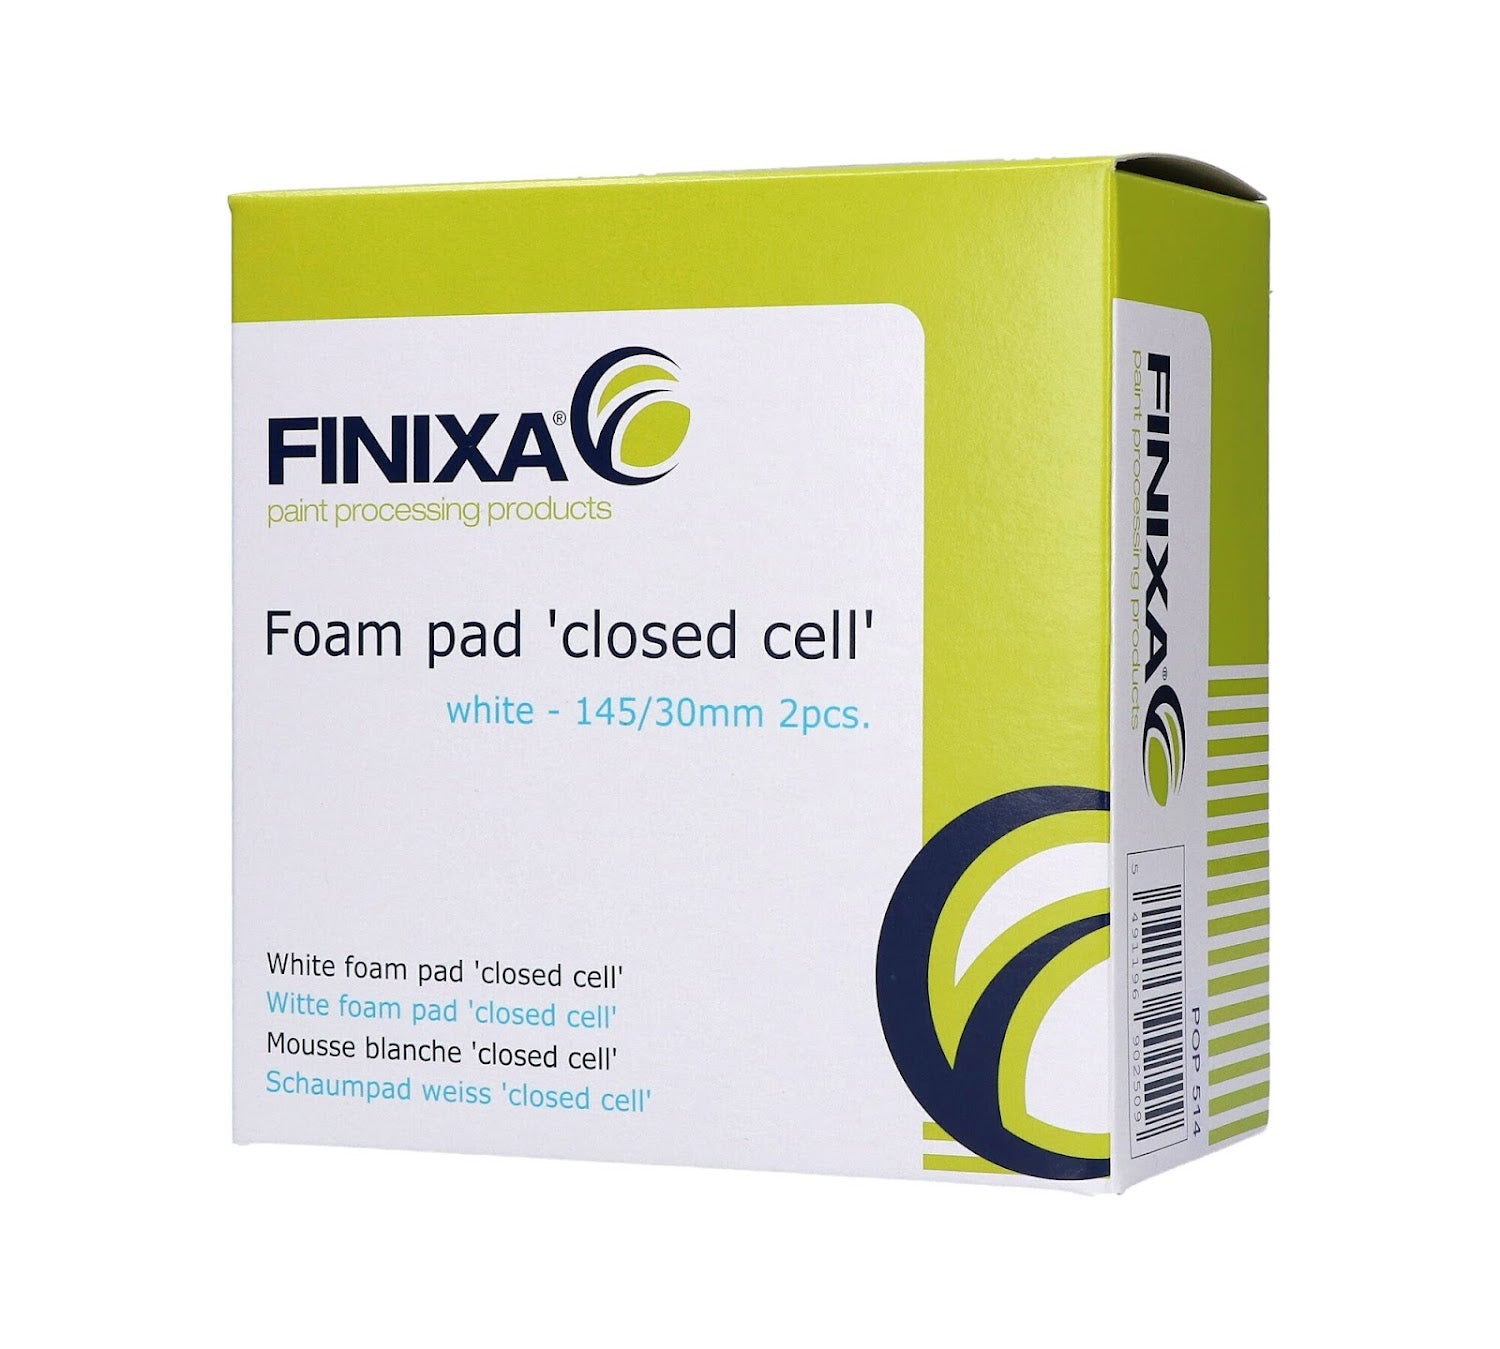 Finixa Foam Pad "CLOSED CELL" White 145/30